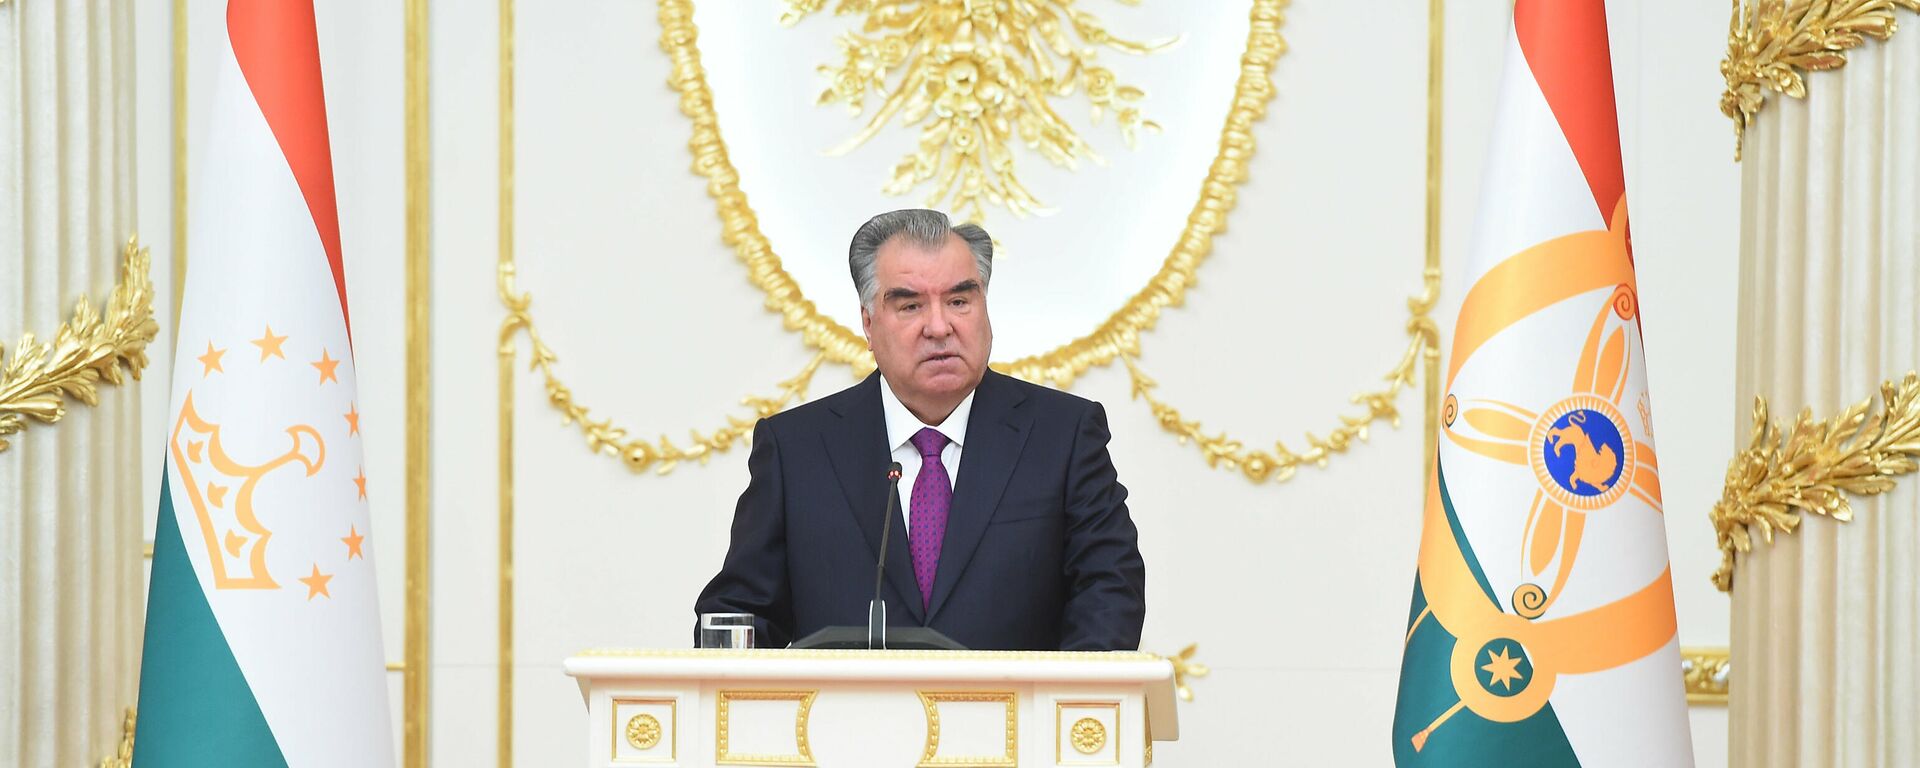 Президент Республики Таджикистан Эмомали Рахмон - Sputnik Тоҷикистон, 1920, 09.11.2021